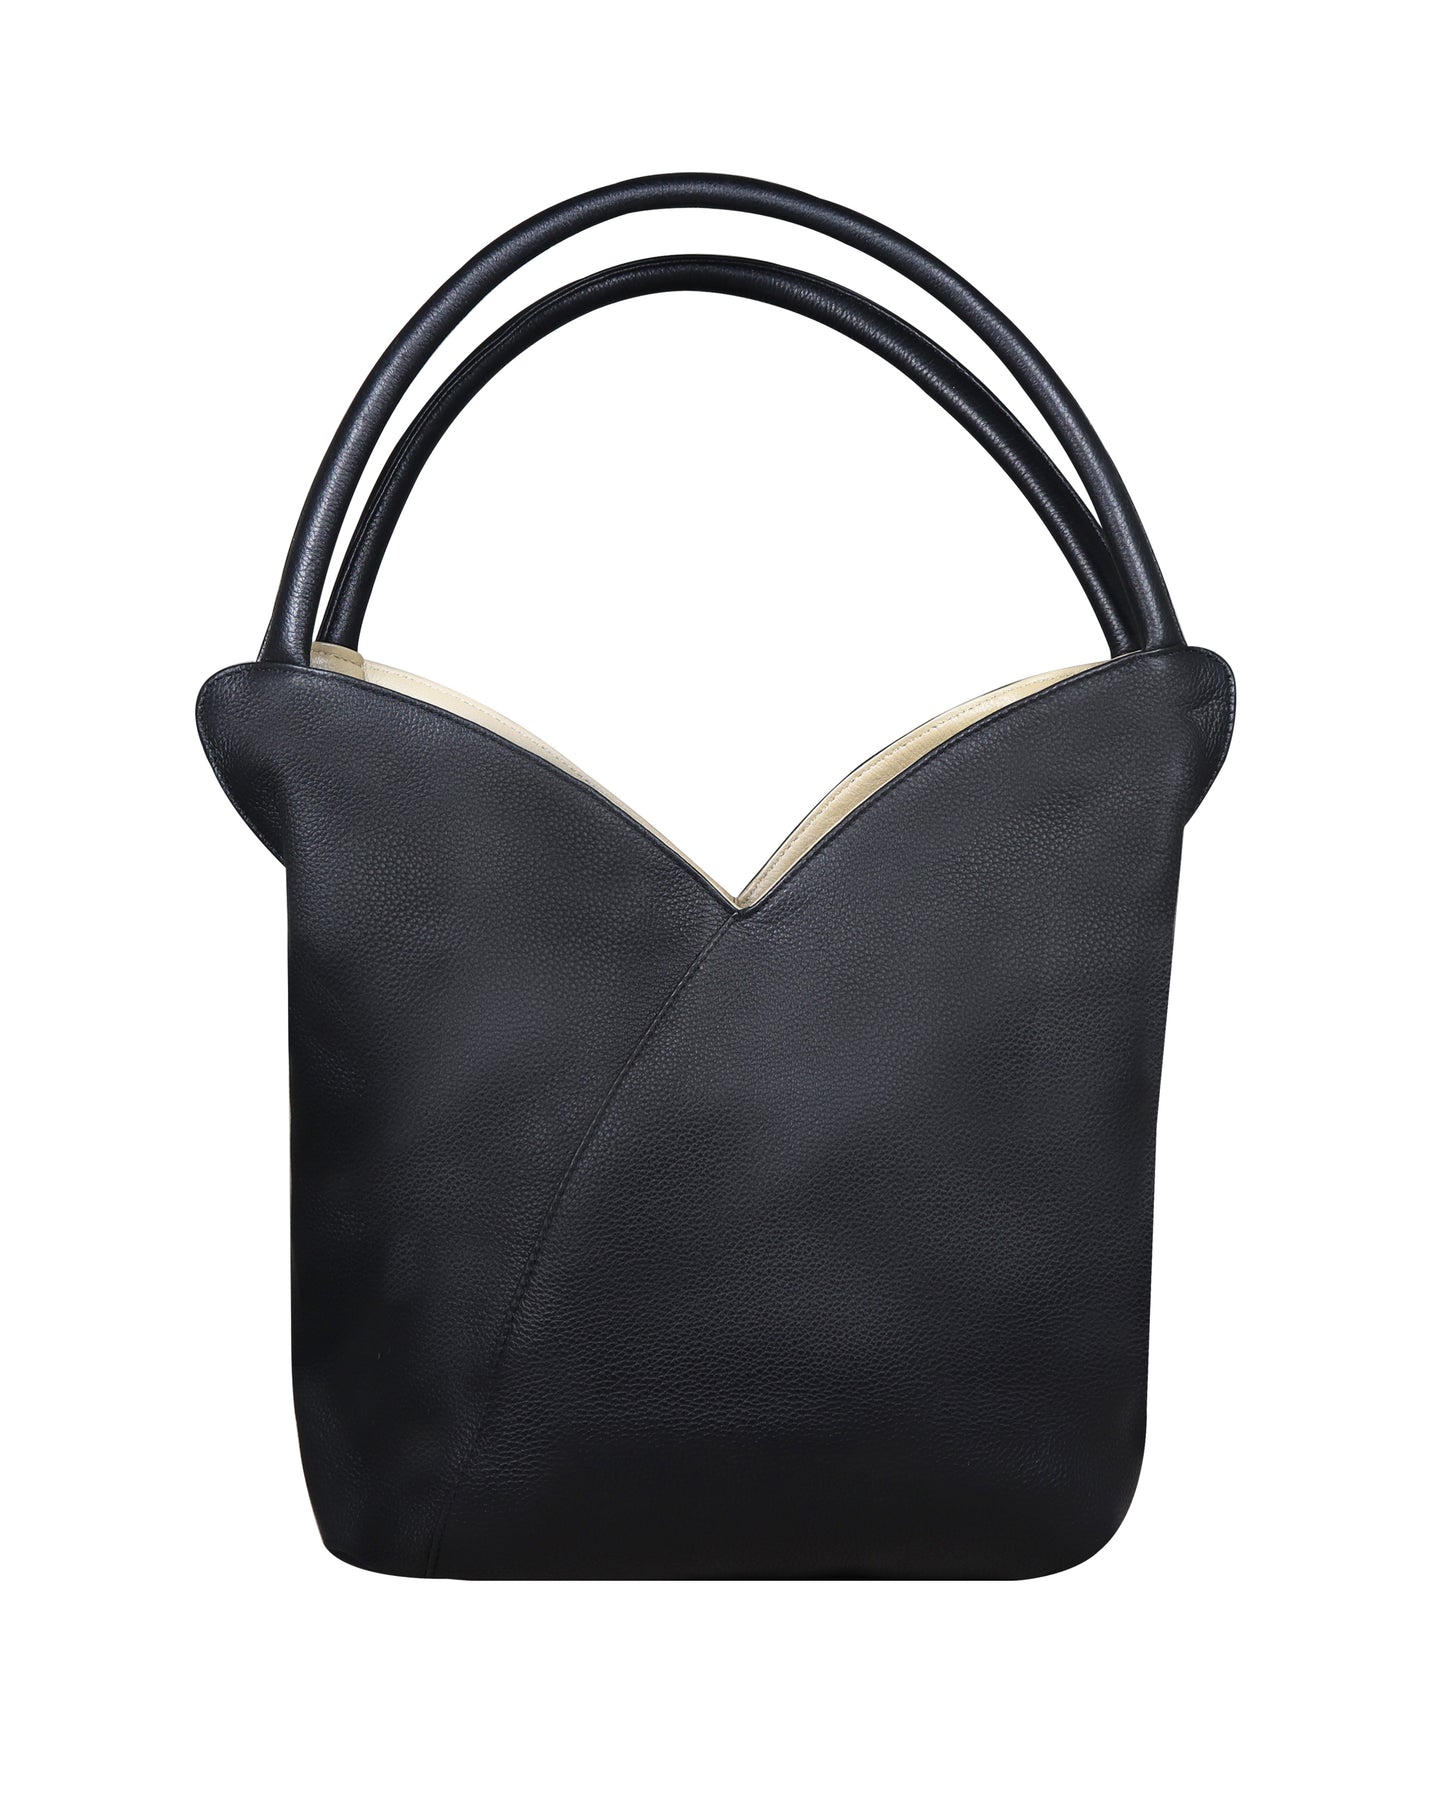 Calfnero Women's Genuine Leather Shoulder Bag (71370-Black-Beige)